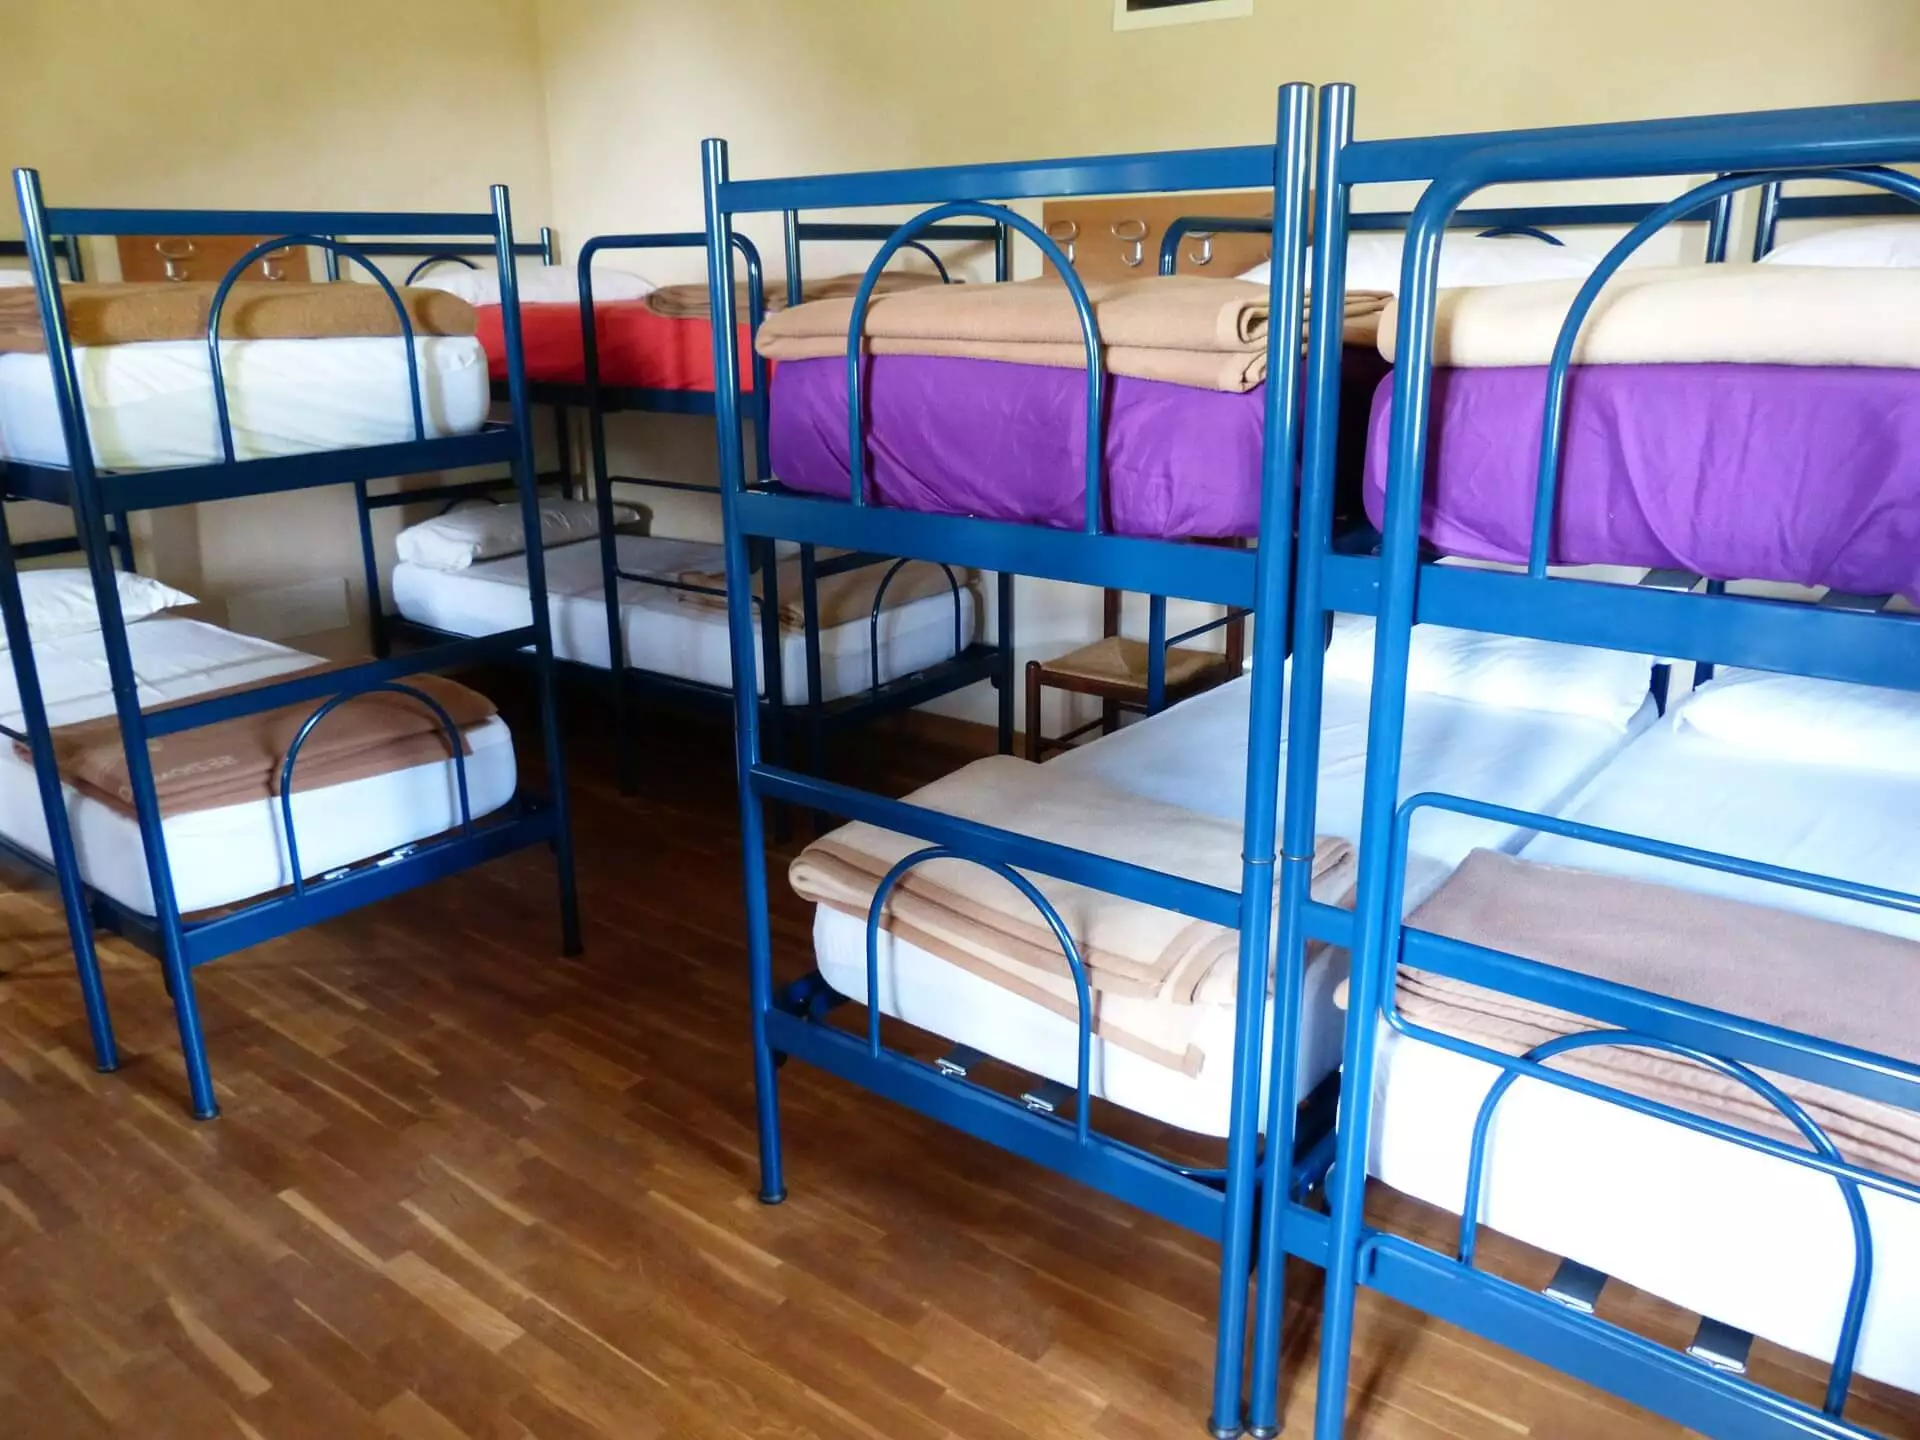 Bunk beds in a hostel in Barcelona